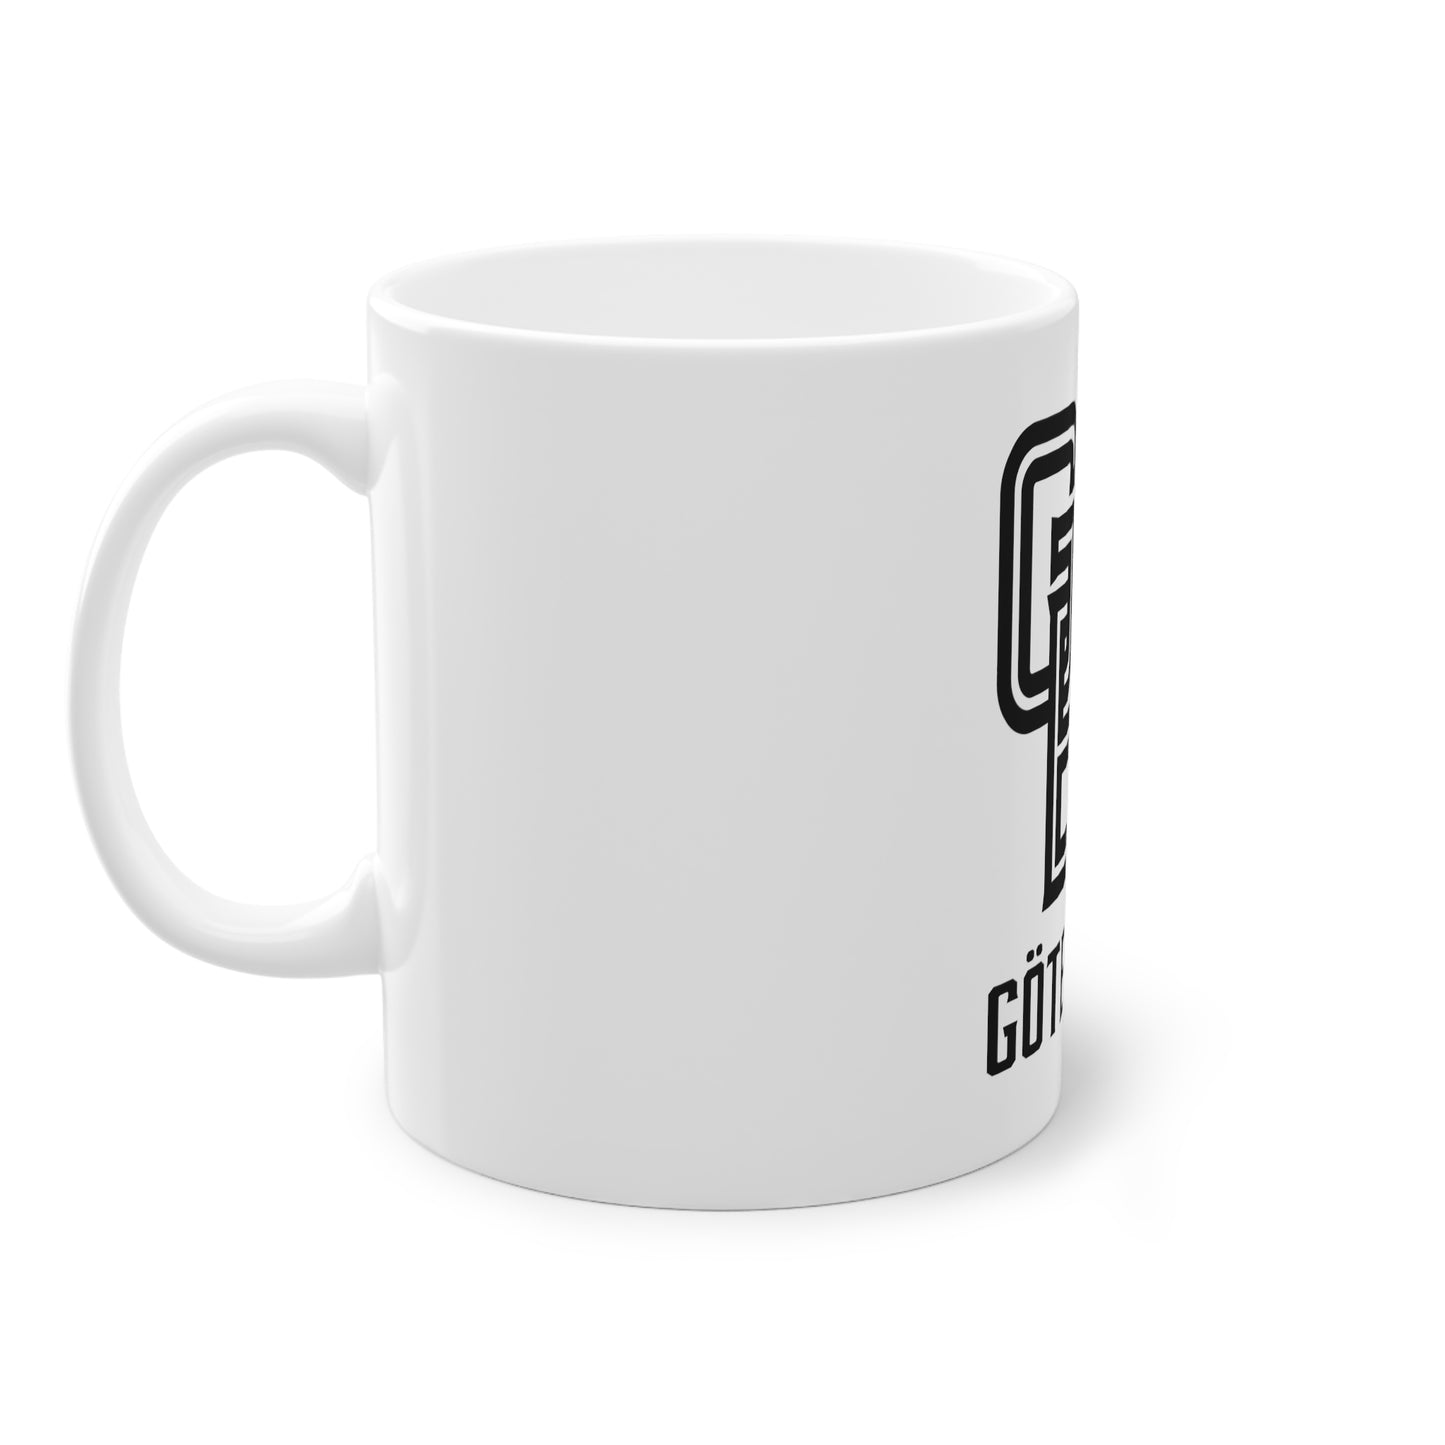 Standard Mug, 11oz